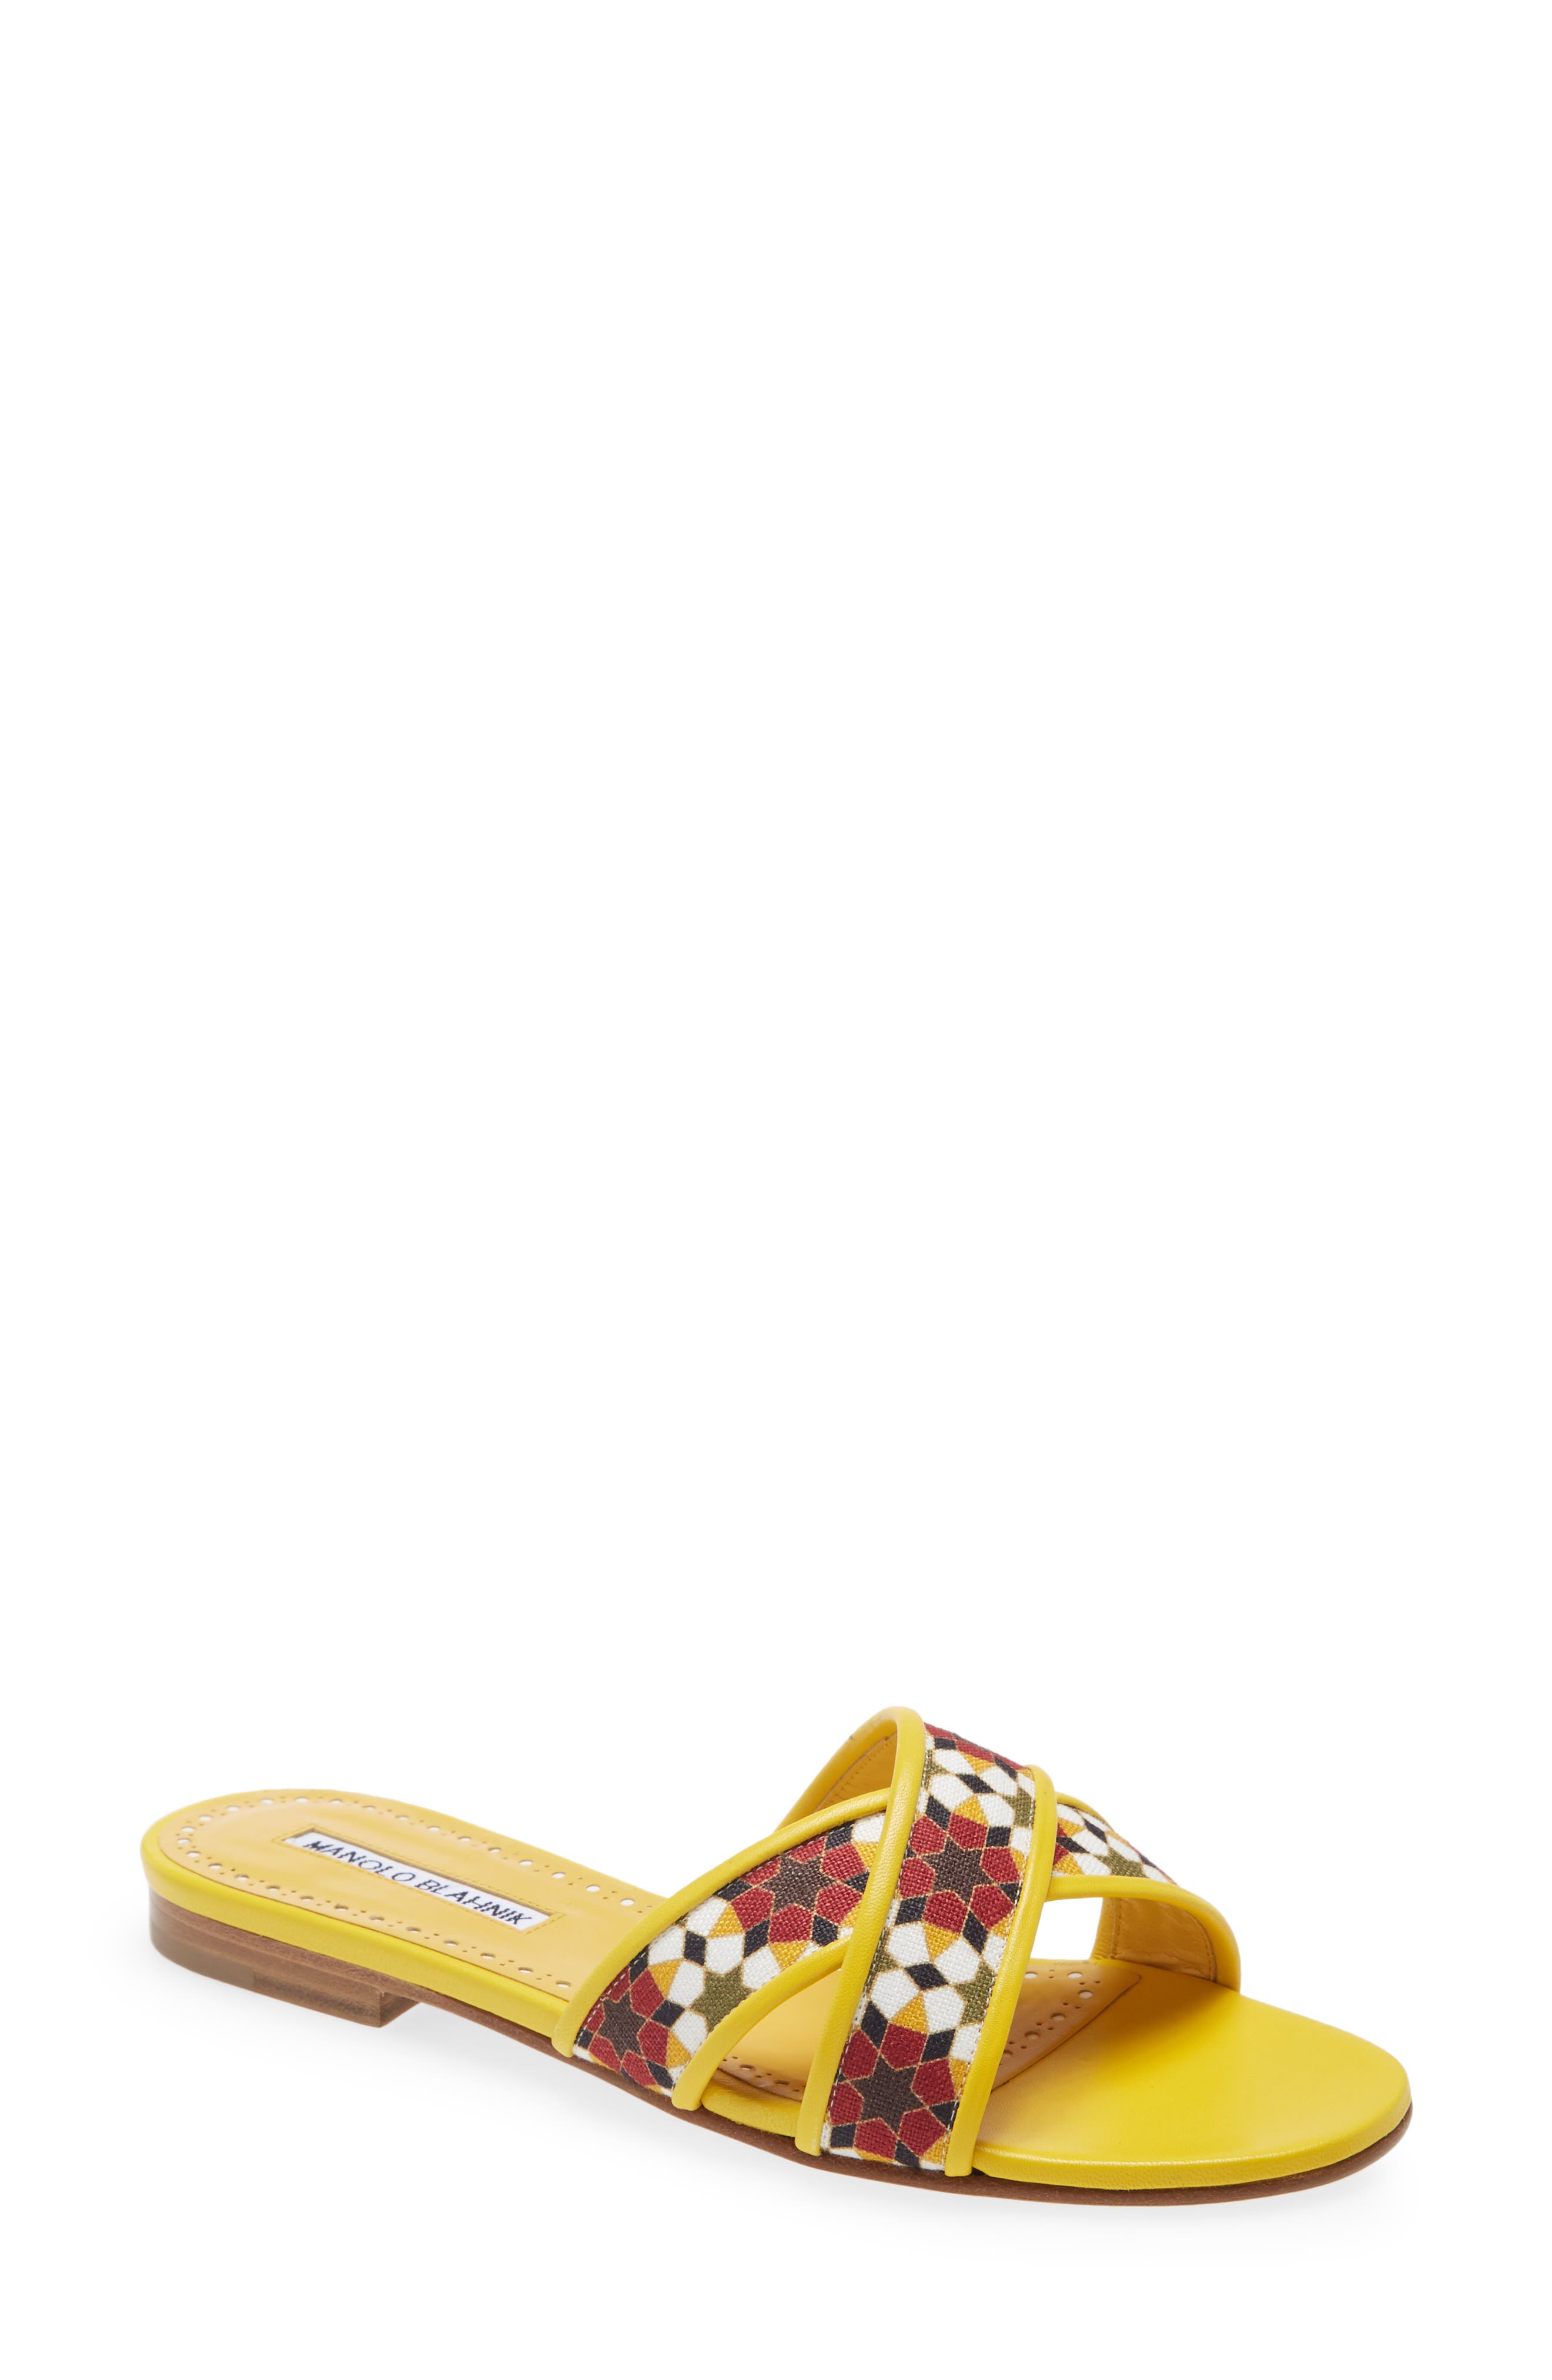 Manolo Blahnik Ifneta Crisscross Sandal in Yellow at Nordstrom, Size 6Us